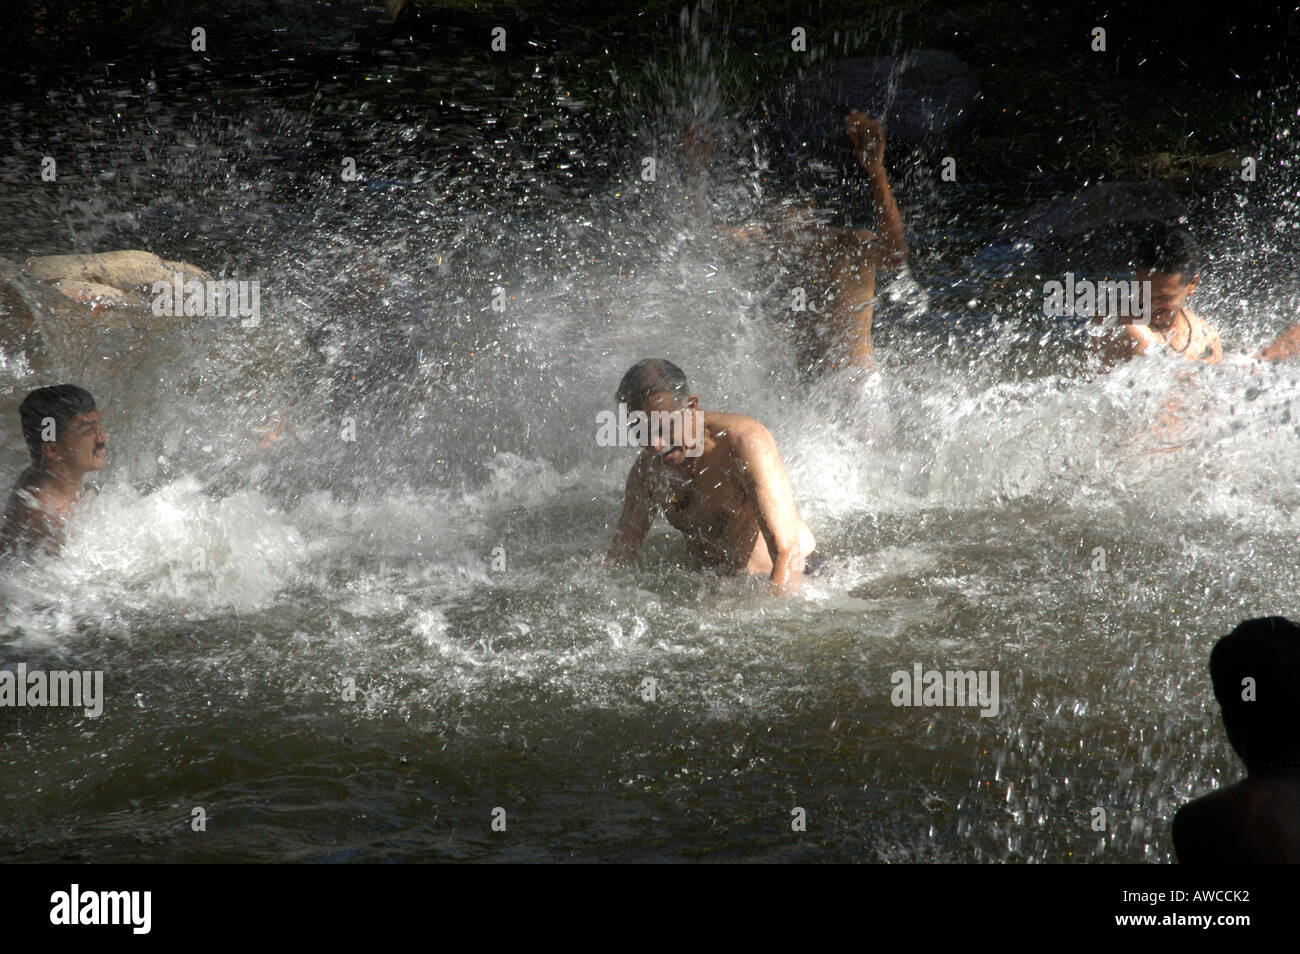 BATHING IN RIVER KERALA Stock Photo